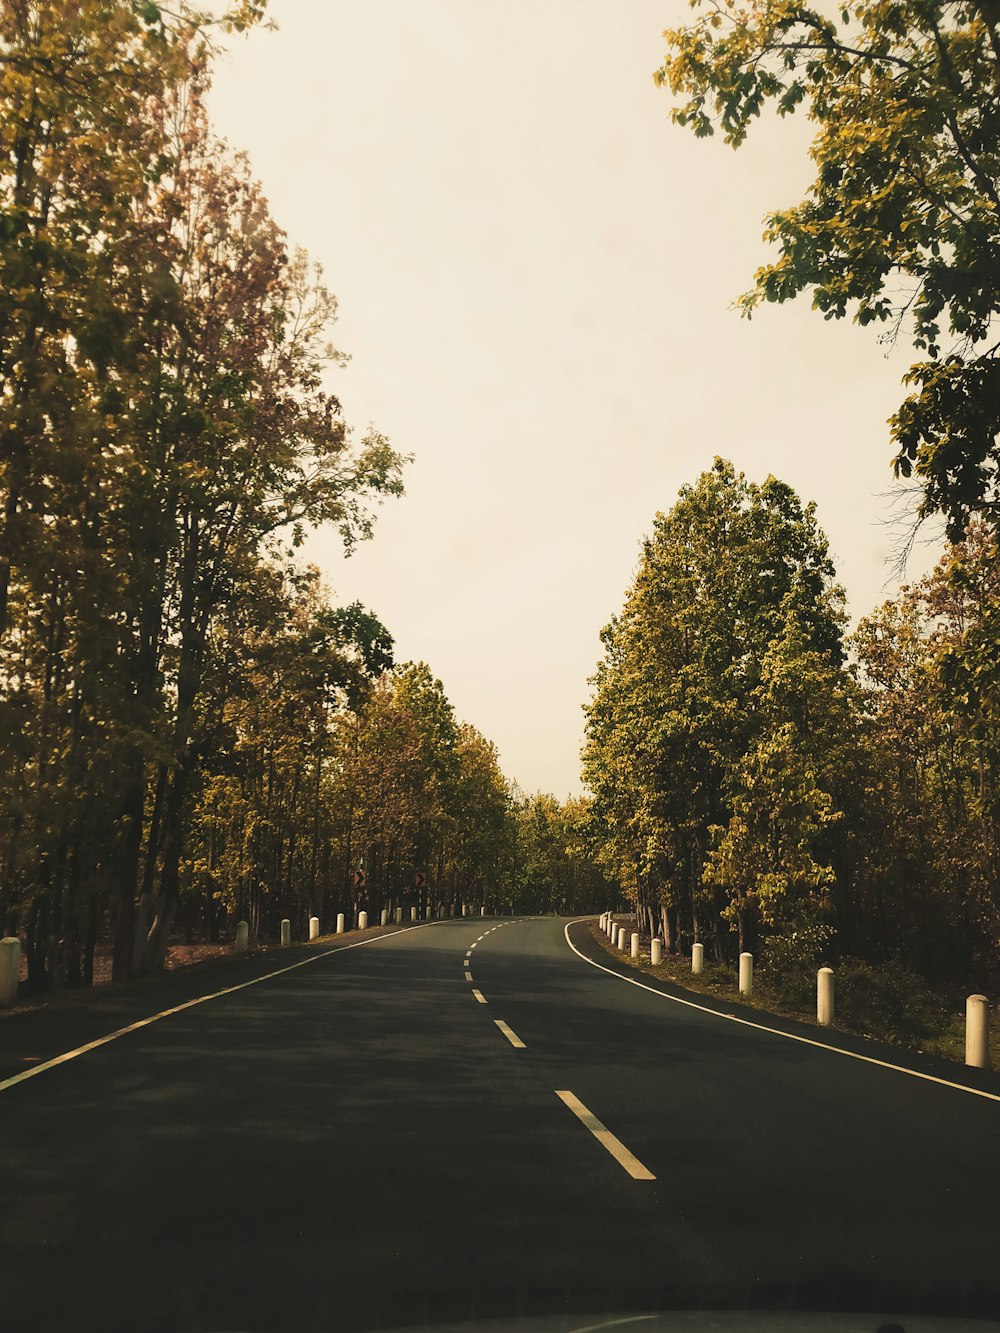 gray concrete road between trees